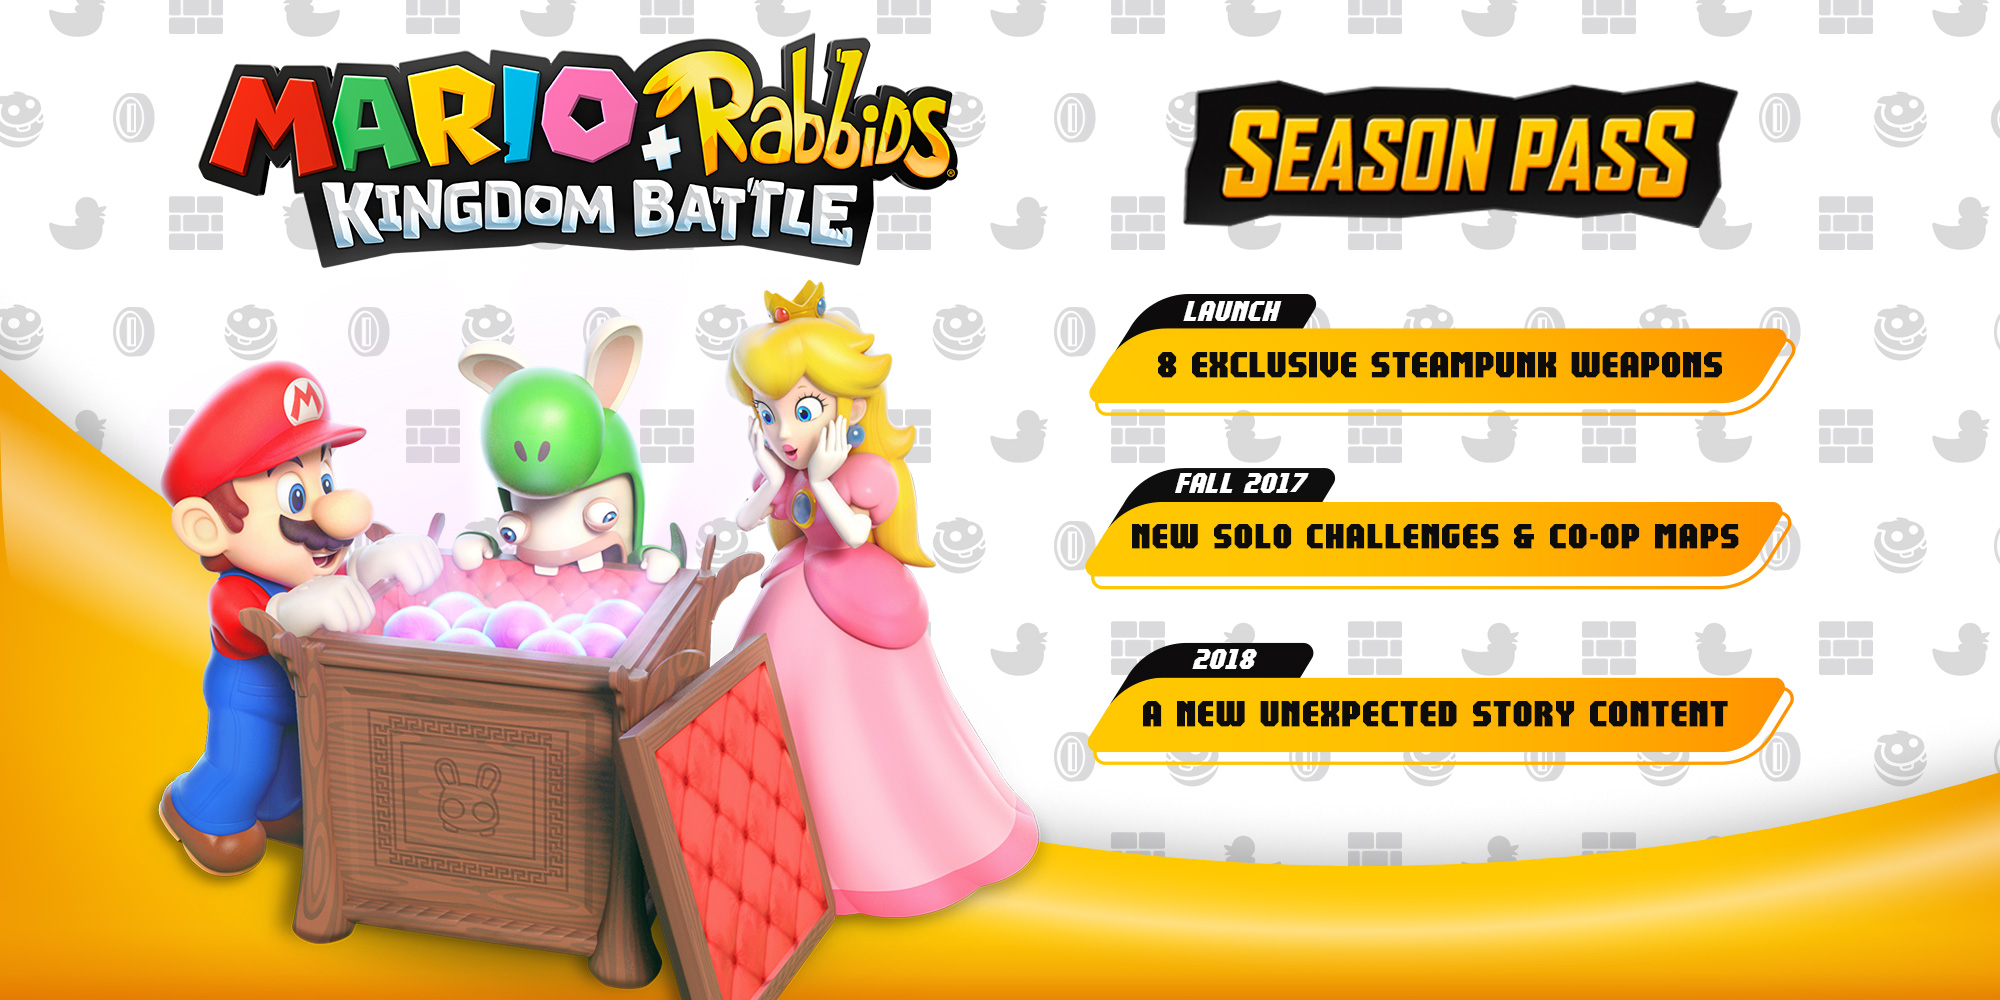 Mario + Rabbids Kingdom Battle season pass